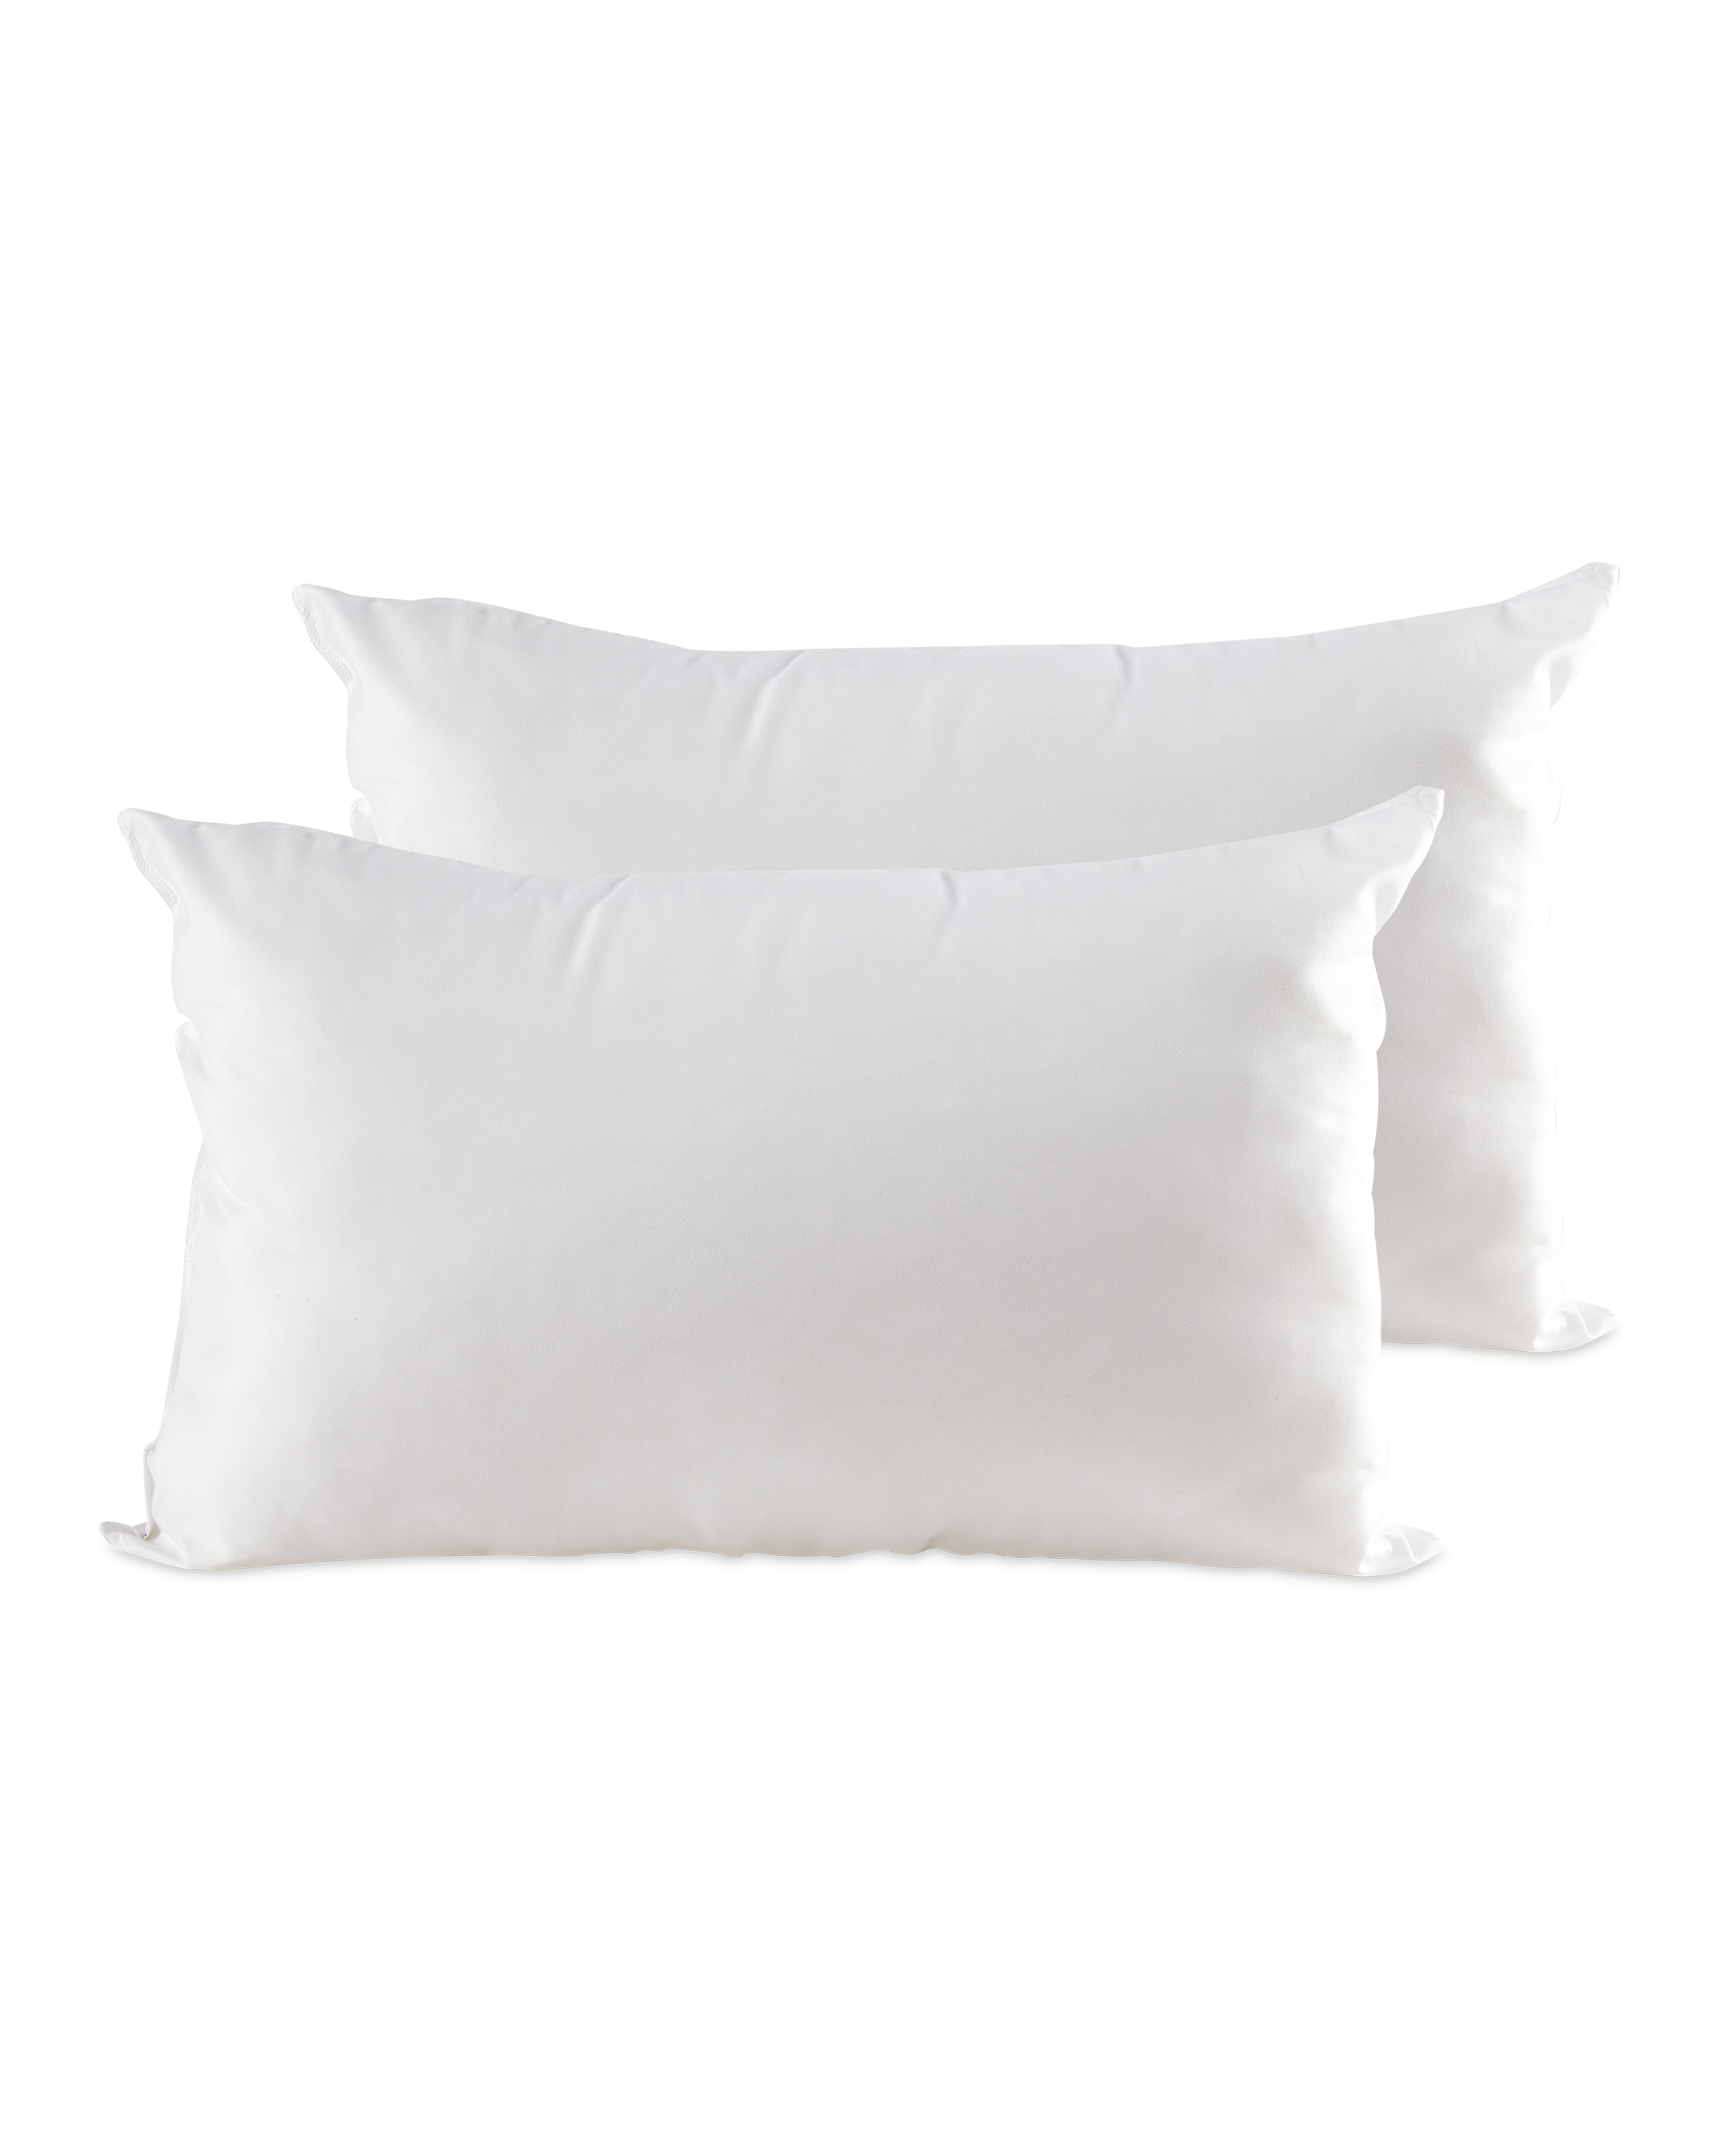 2 Climate Control Pillows - ALDI UK